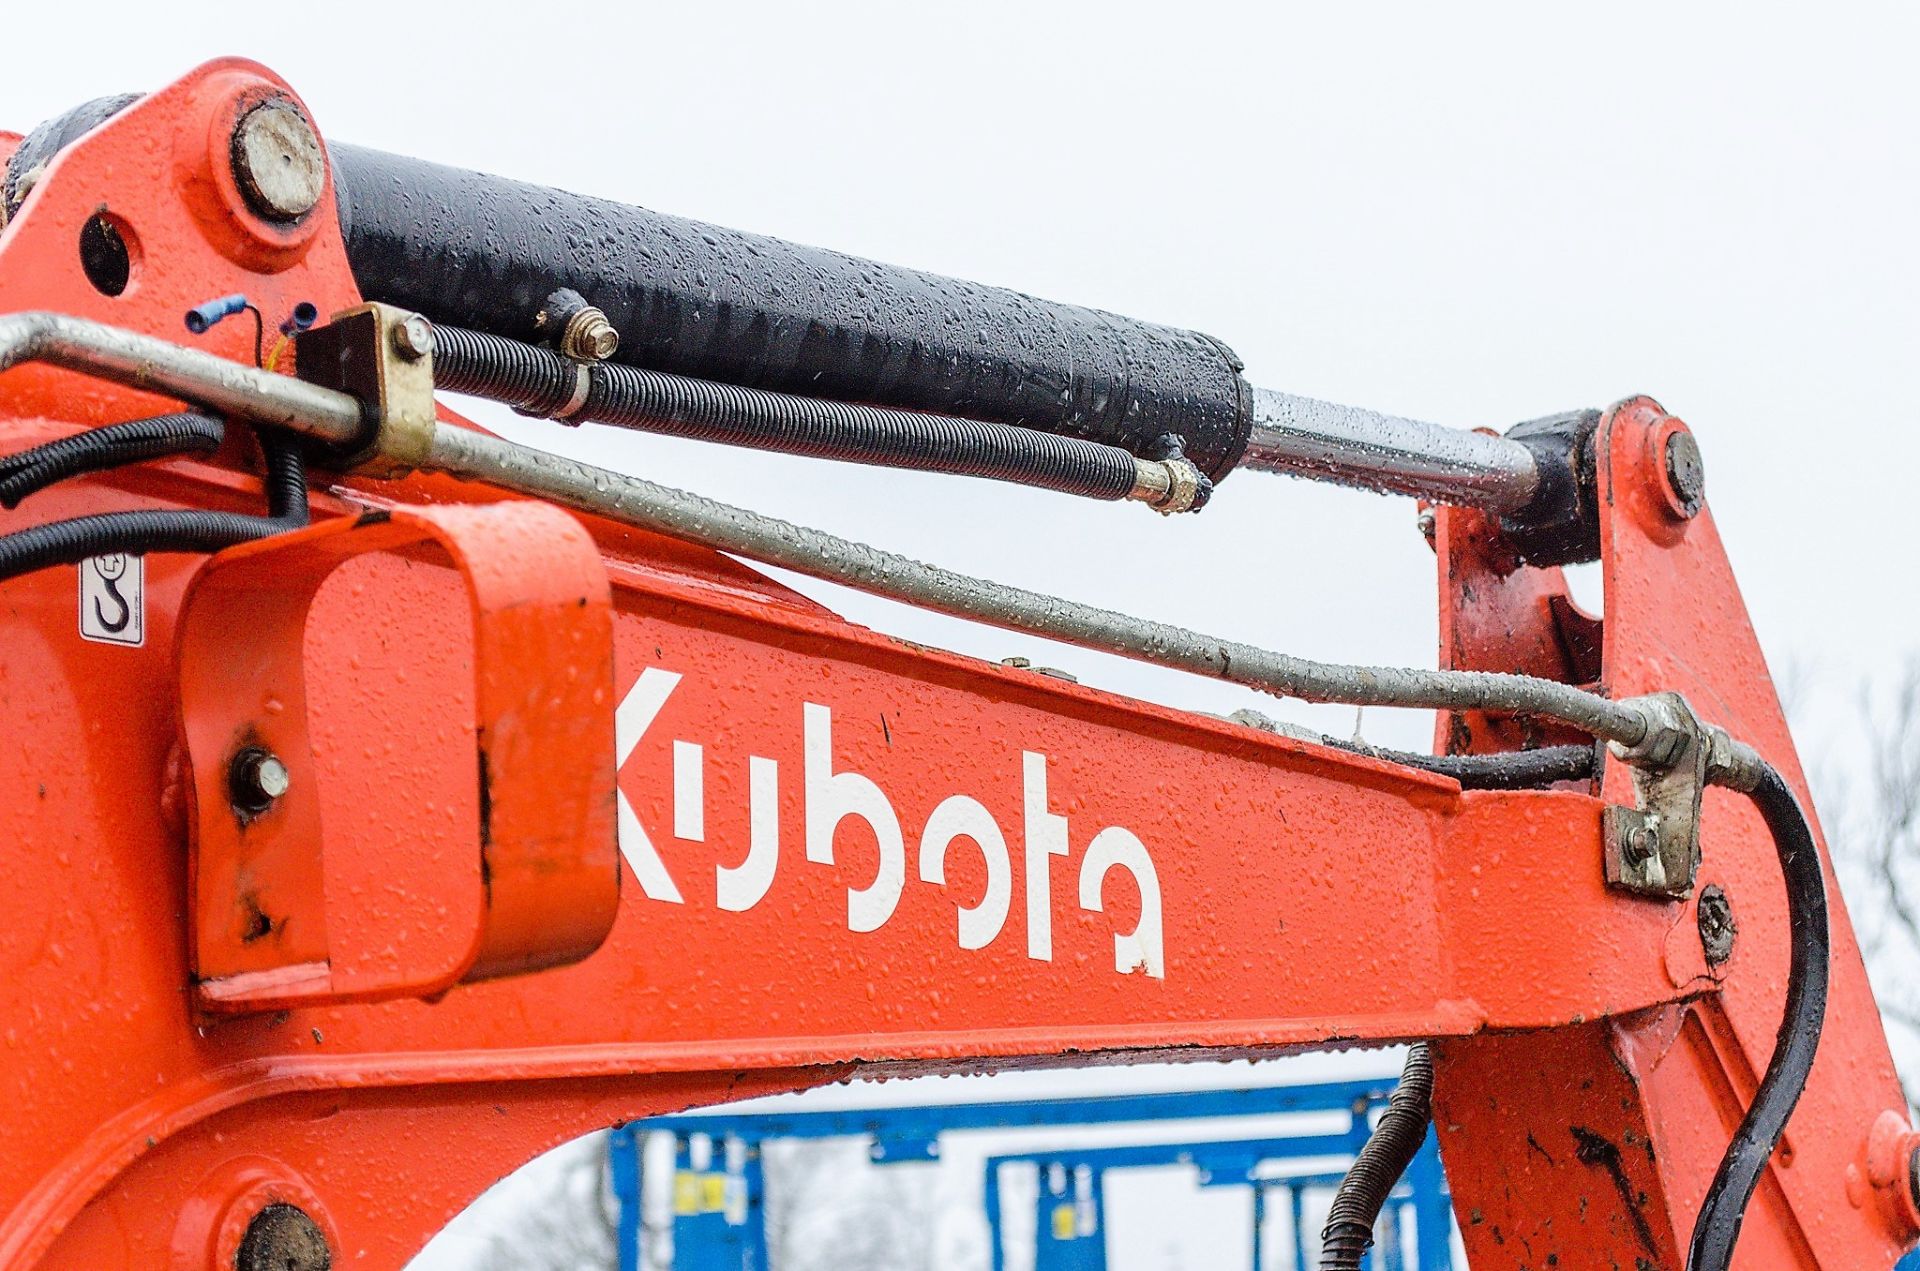 Kubota KX61-3 2.6 tonne rubber tracked mini excavator Year: 2014 S/N: 80737 Recorded Hours: 3632 - Image 15 of 20